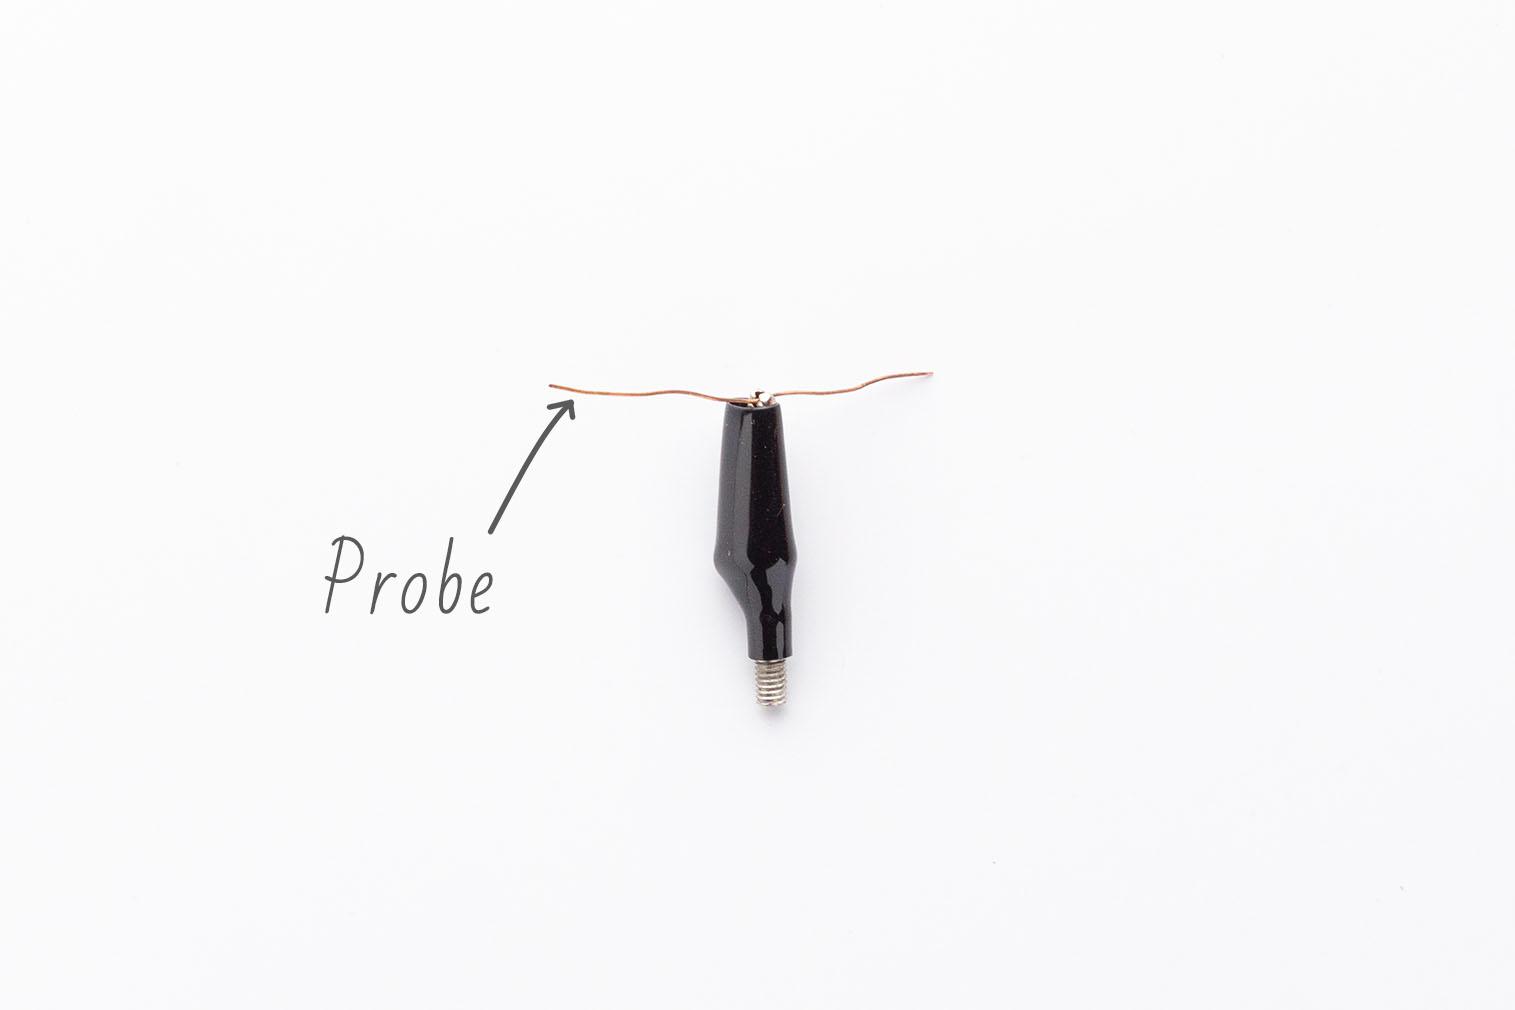 hdmi cable repair trace probe@0.5x.jpg